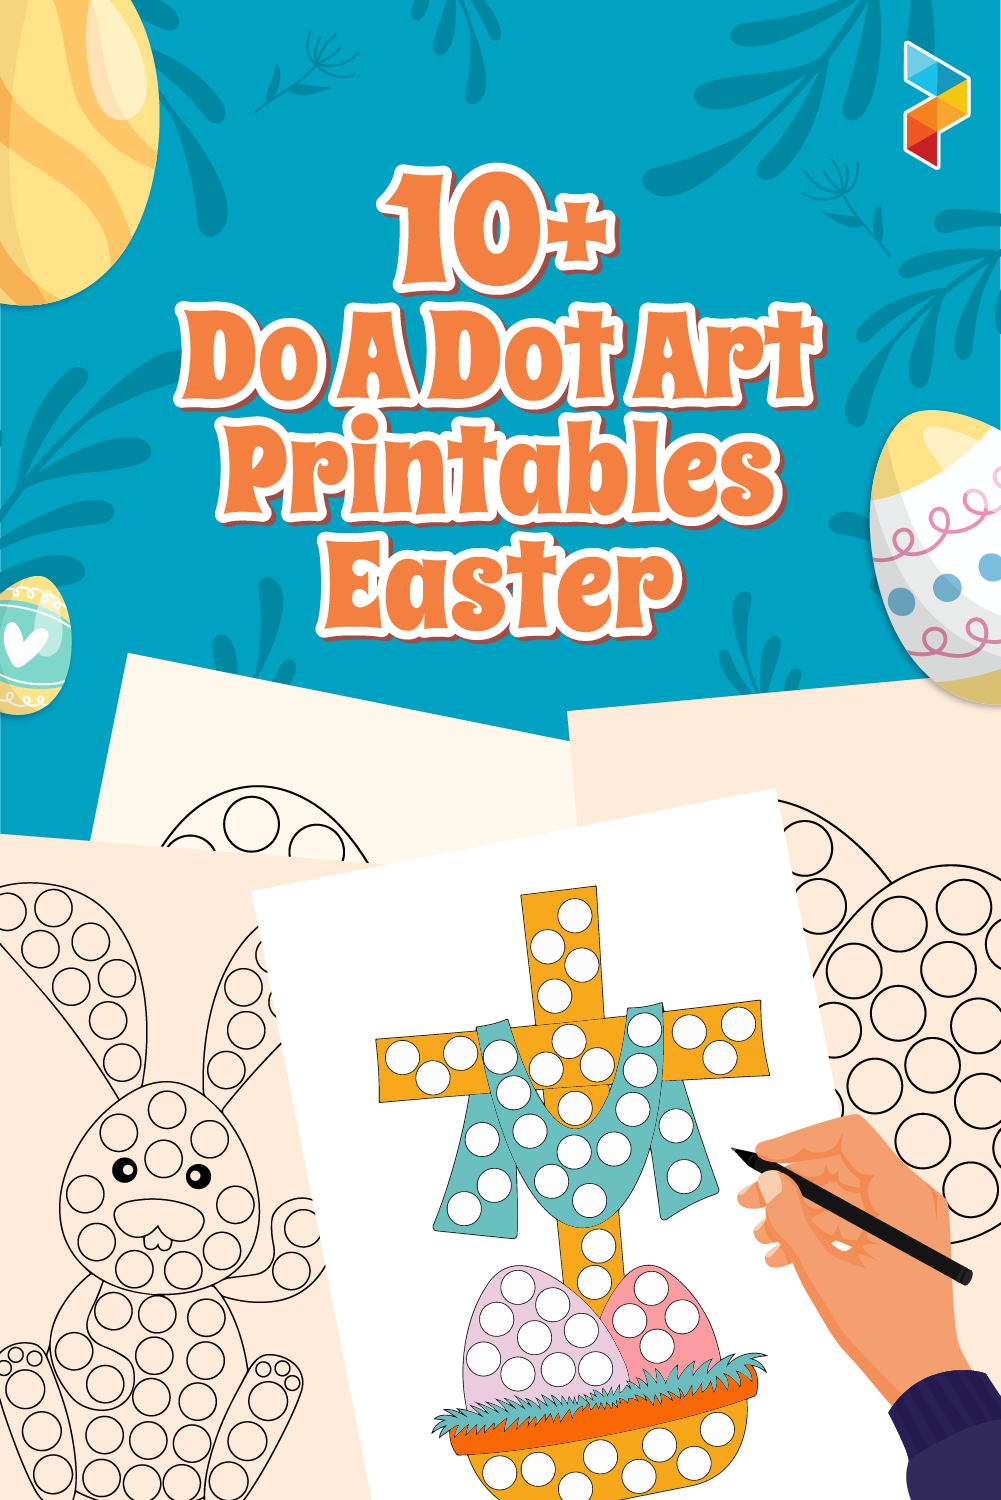 Do A Dot Art Easter